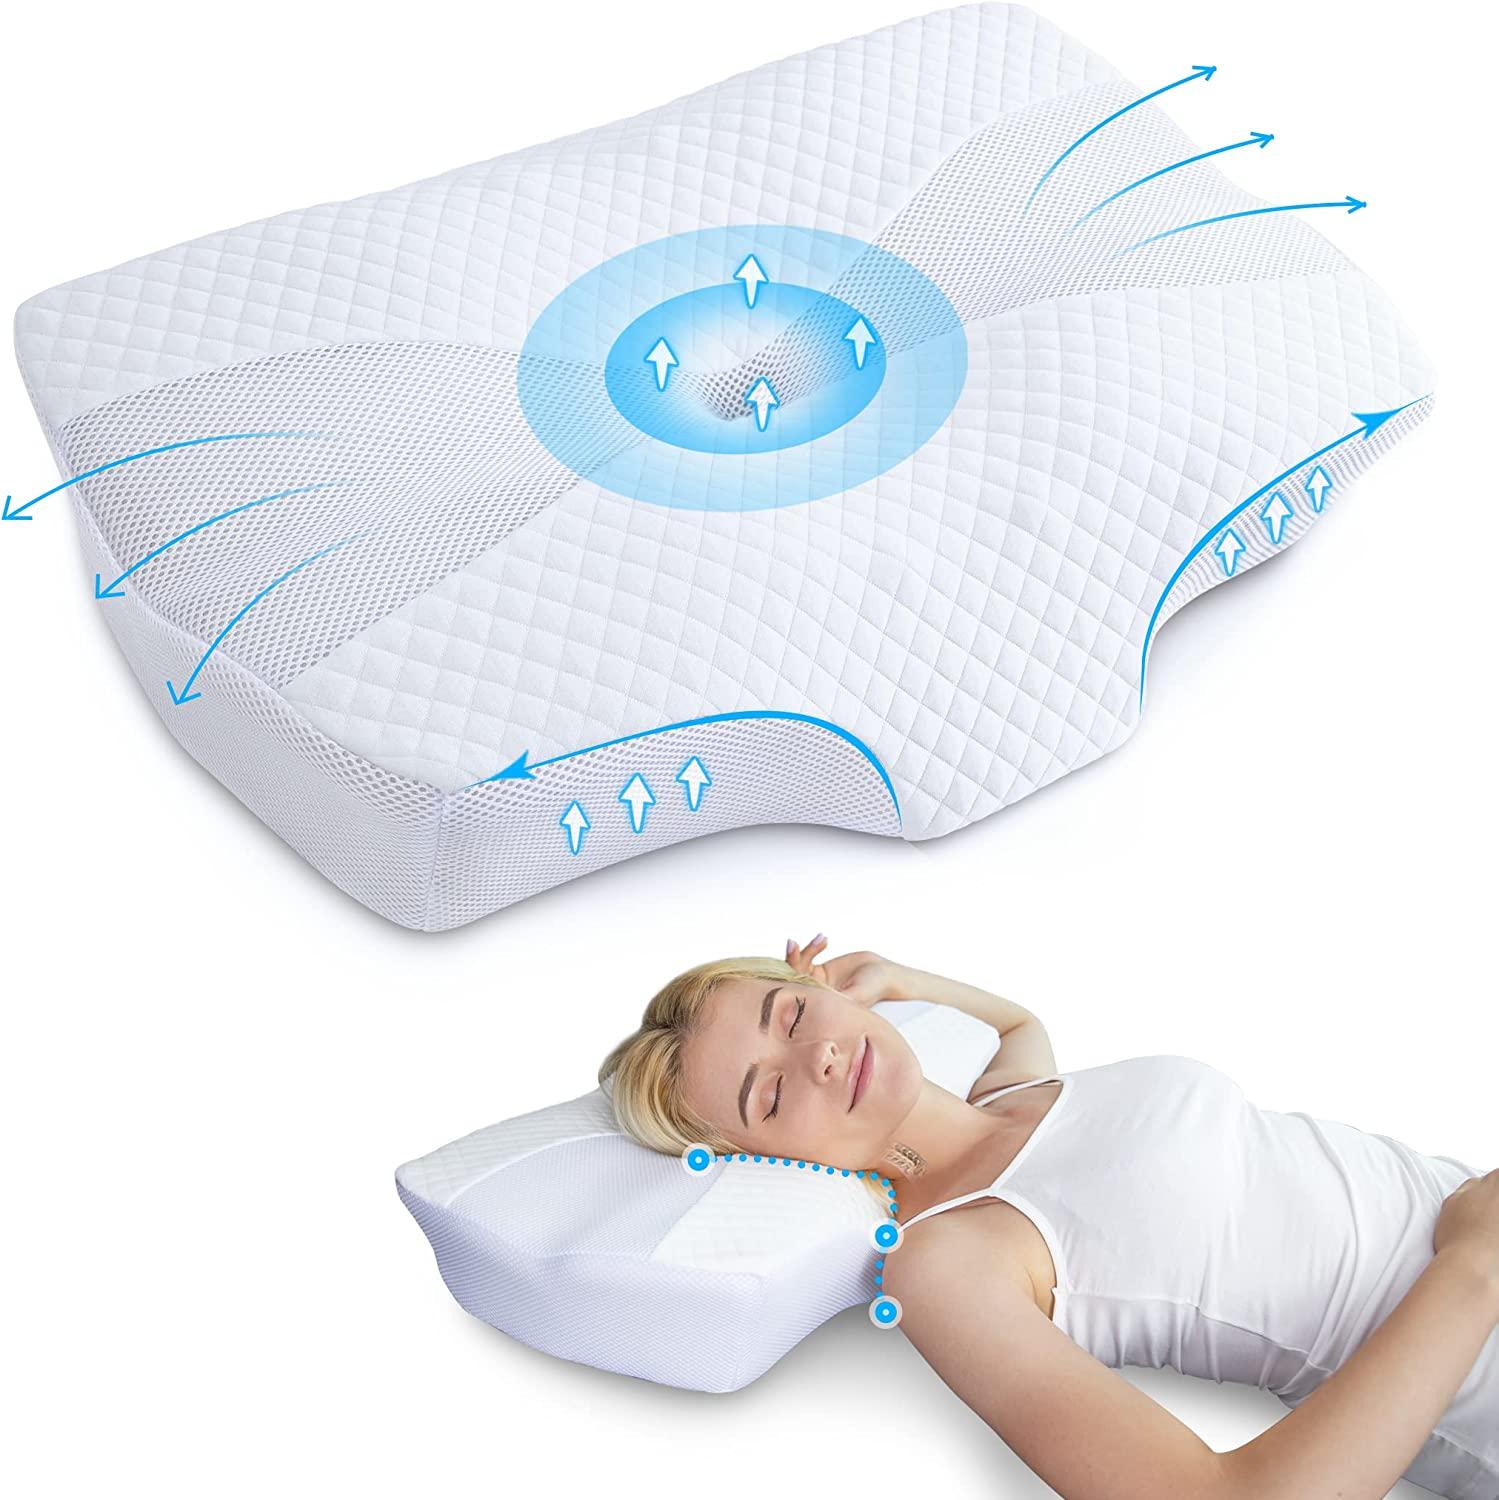 Cervical Pillow For Neck, Odorless Contour Memory Foam Pillows